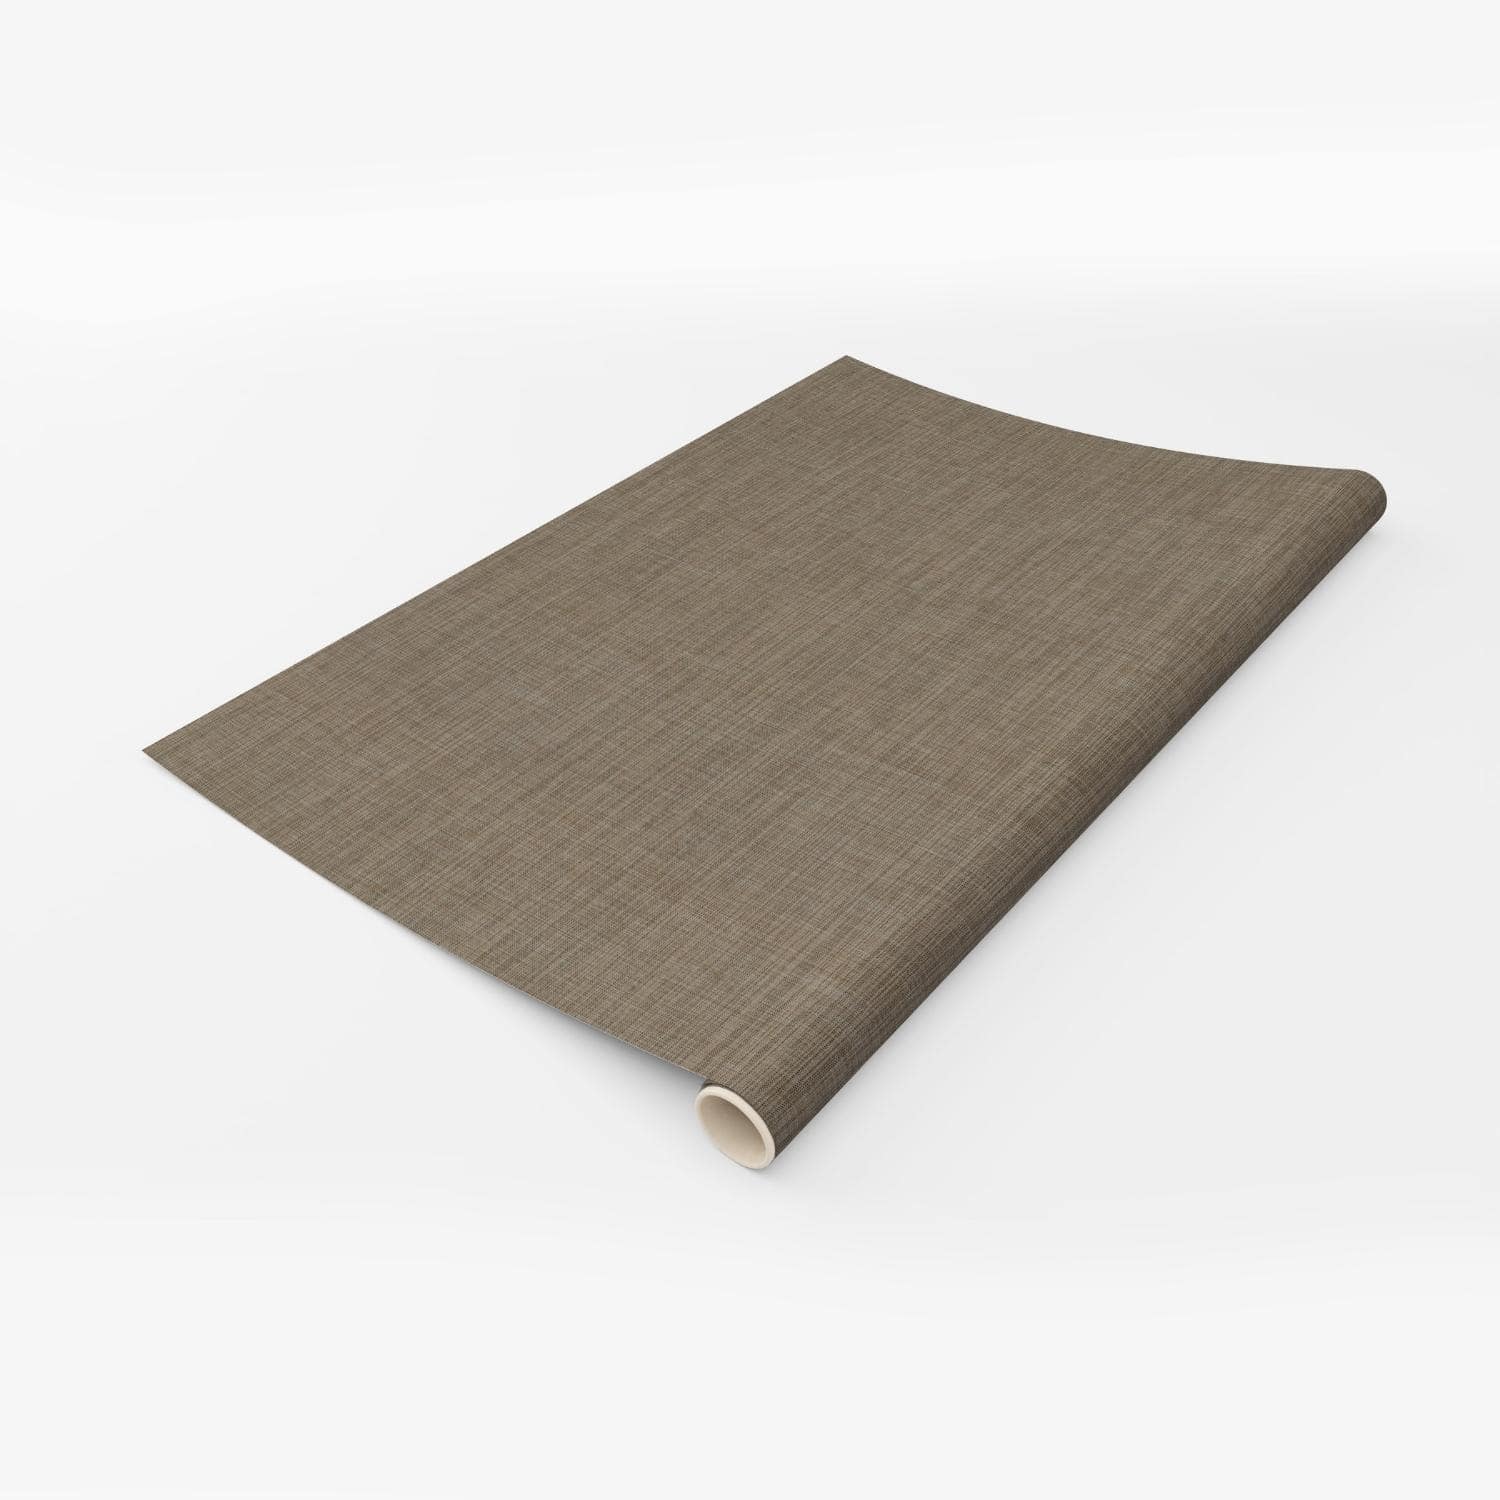 NG07-film-adhesif-decoratif-colle-anti-bulle-aire-textile-tissu-marron-clair-texture-renovation-meuble-mur-2